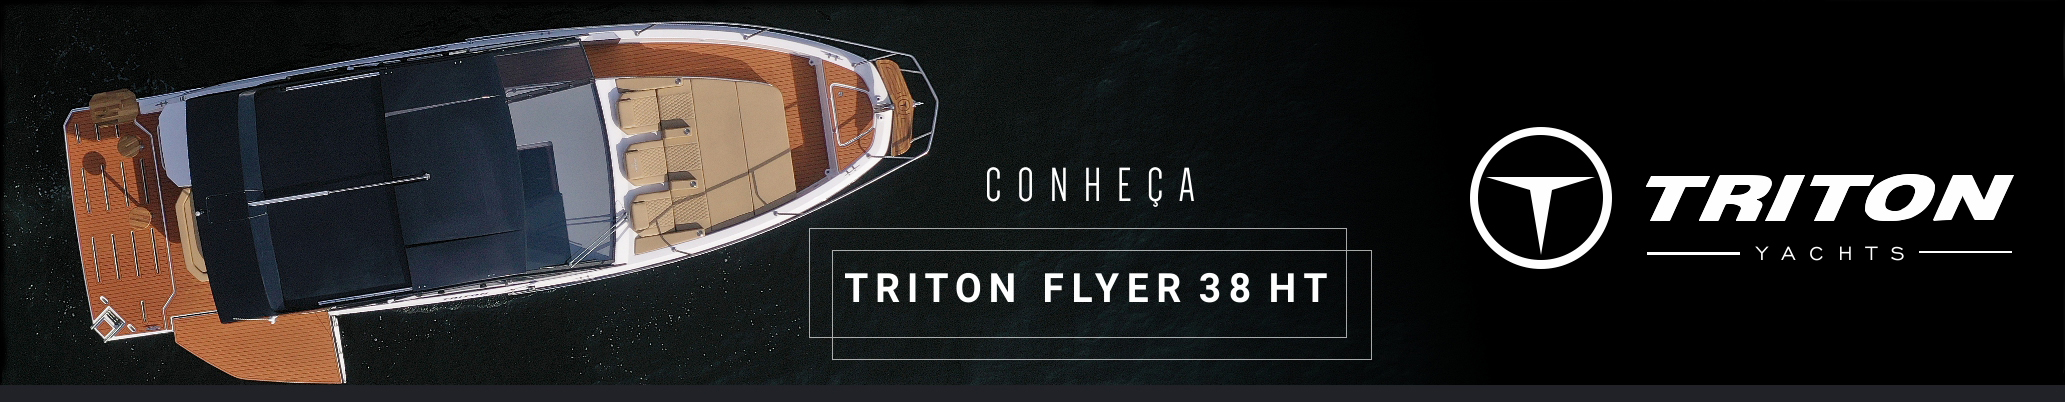 Conheça Triton 38HT